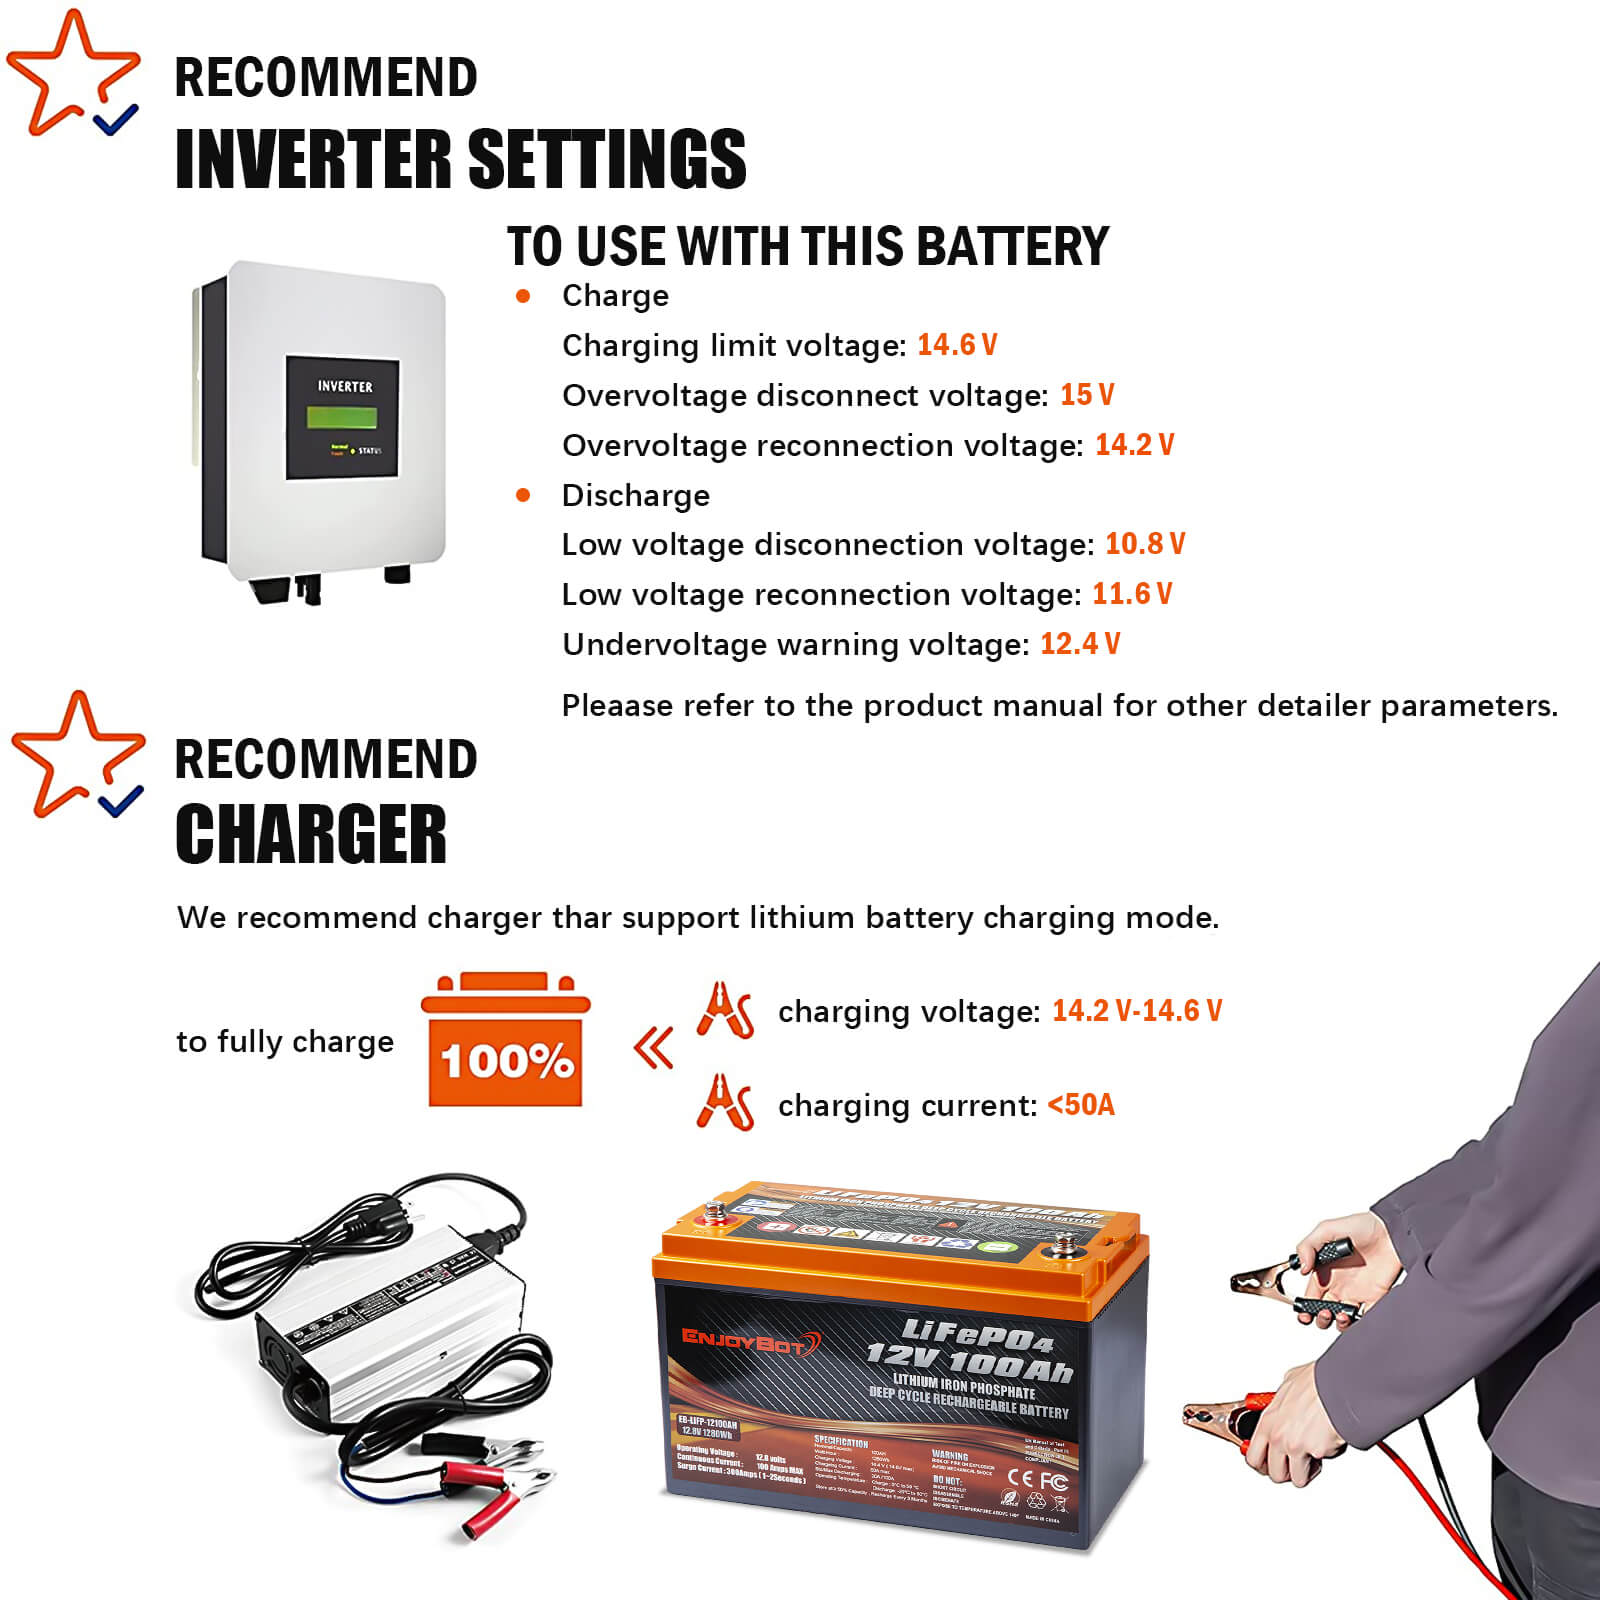 Enjoybot 12v 100ah LiFePO4 Battery - Inverter Setting